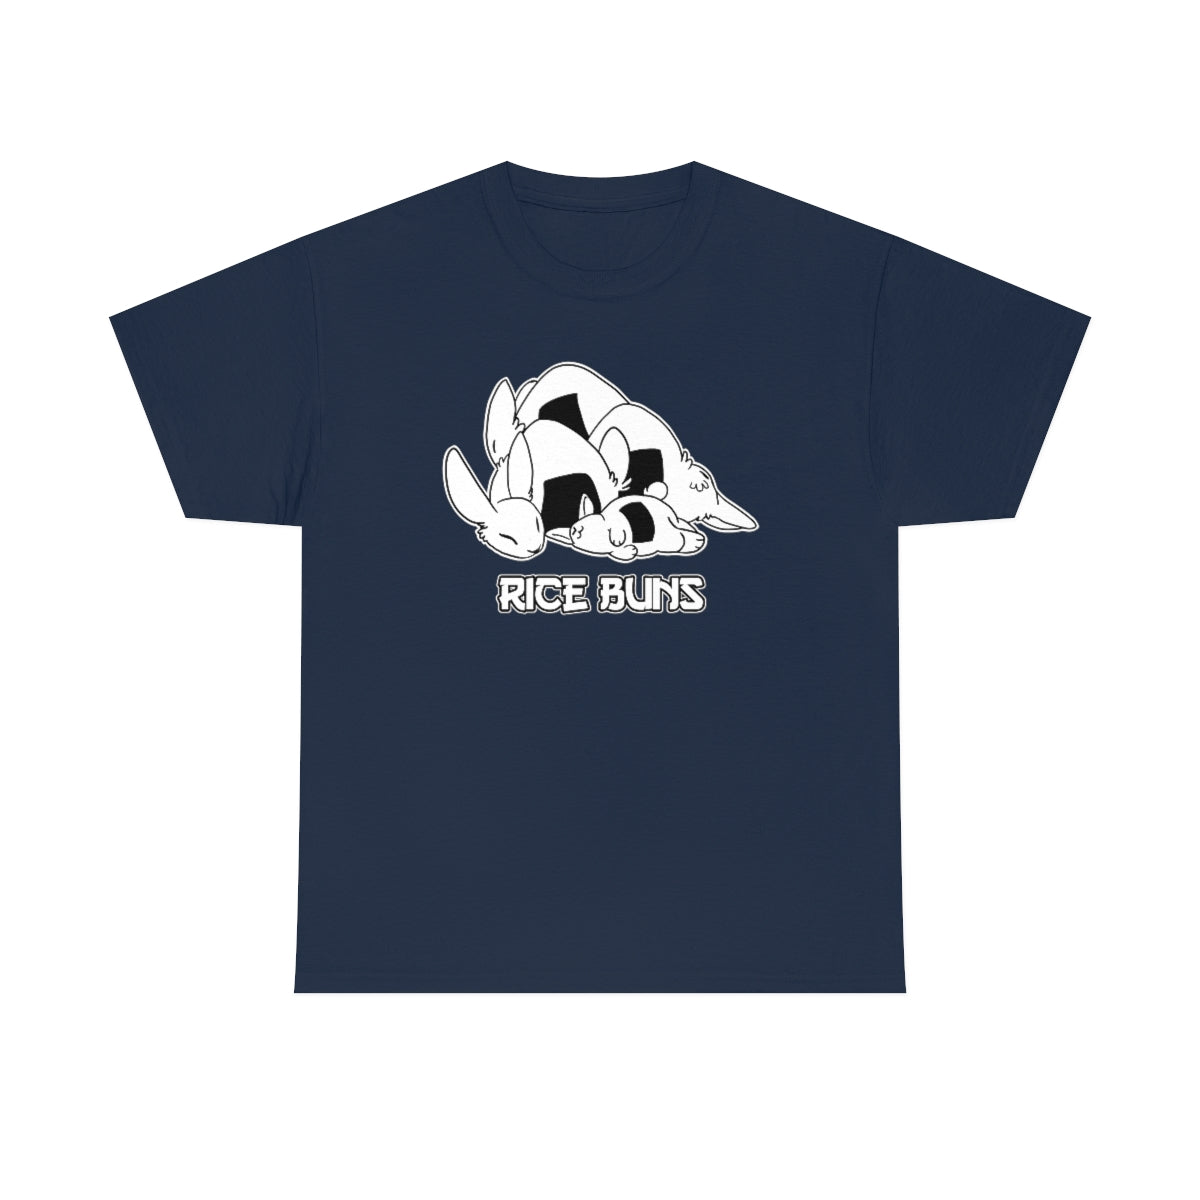 Rice Buns - T-Shirt T-Shirt Crunchy Crowe Navy Blue S 